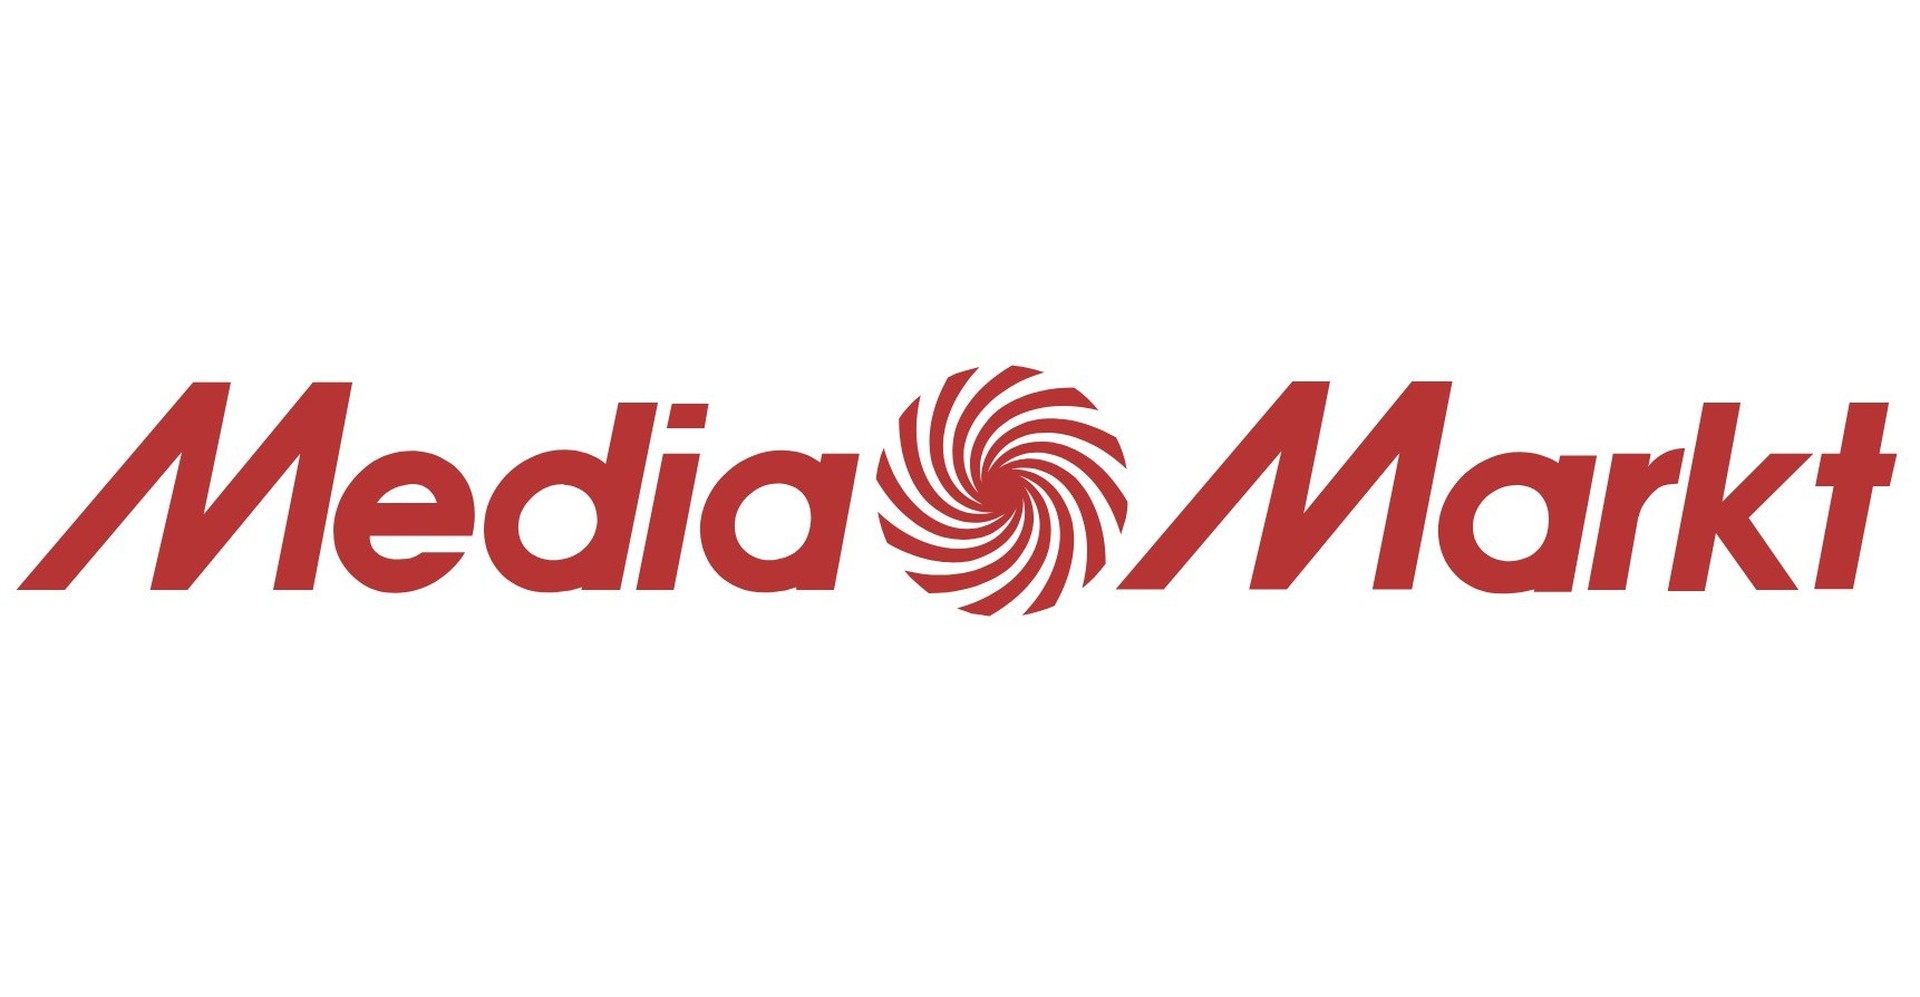 mediamarkt_logo.jpg